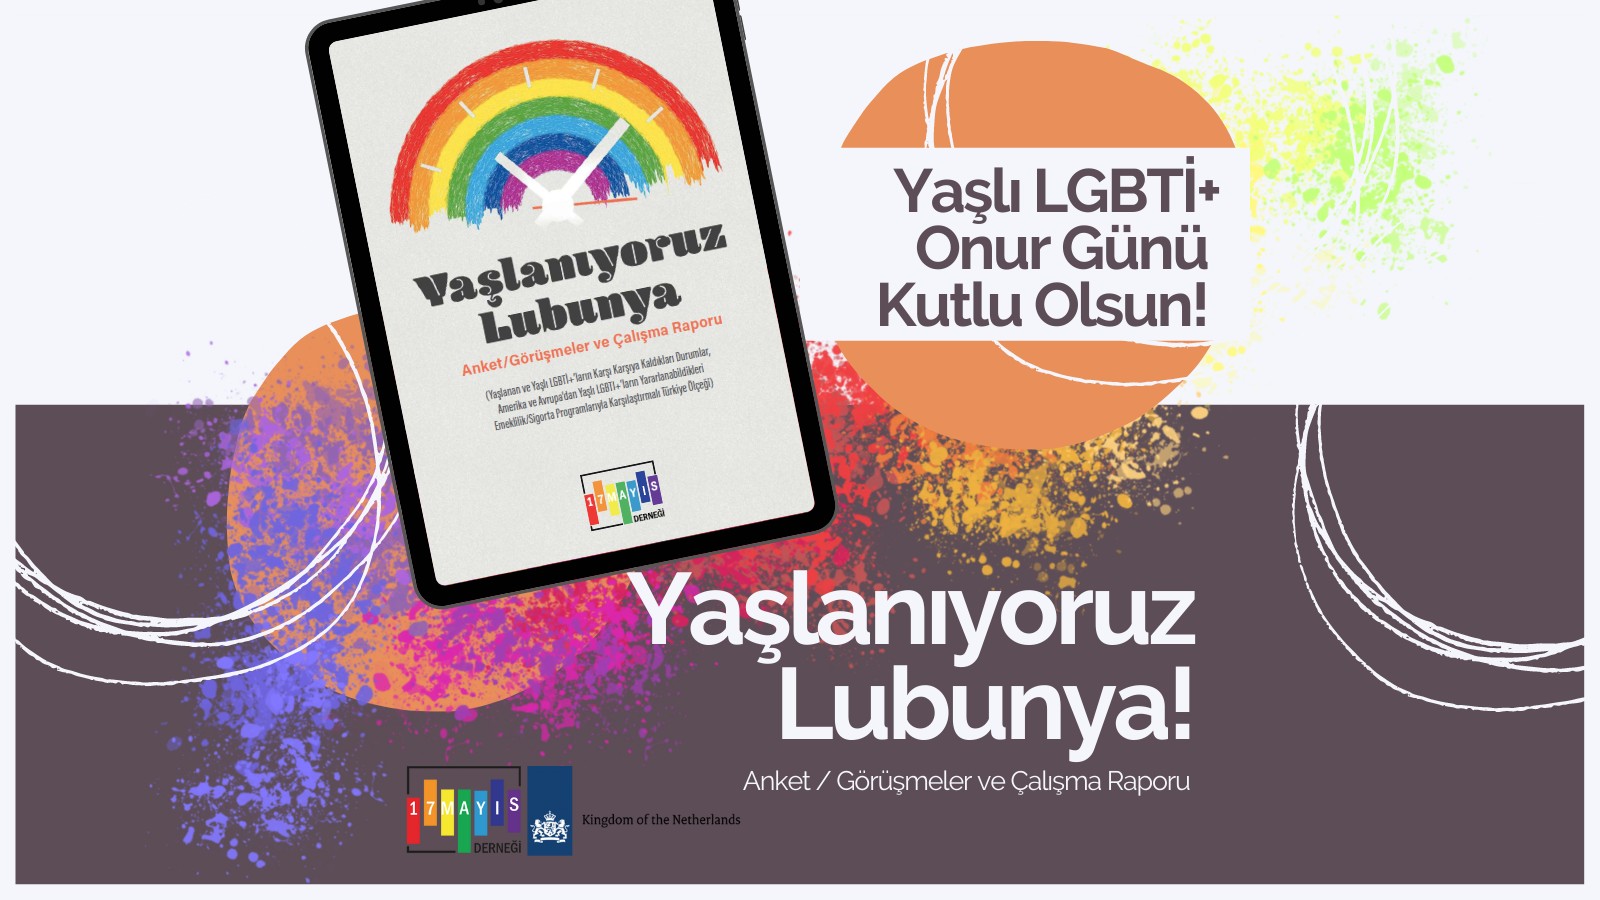 16 Mayıs Yaşlı LGBTİ+ Onur Günü Hediyesi 17 Mayıs’tan: "Yaşlanıyoruz Lubunya!" - 17 Mayıs